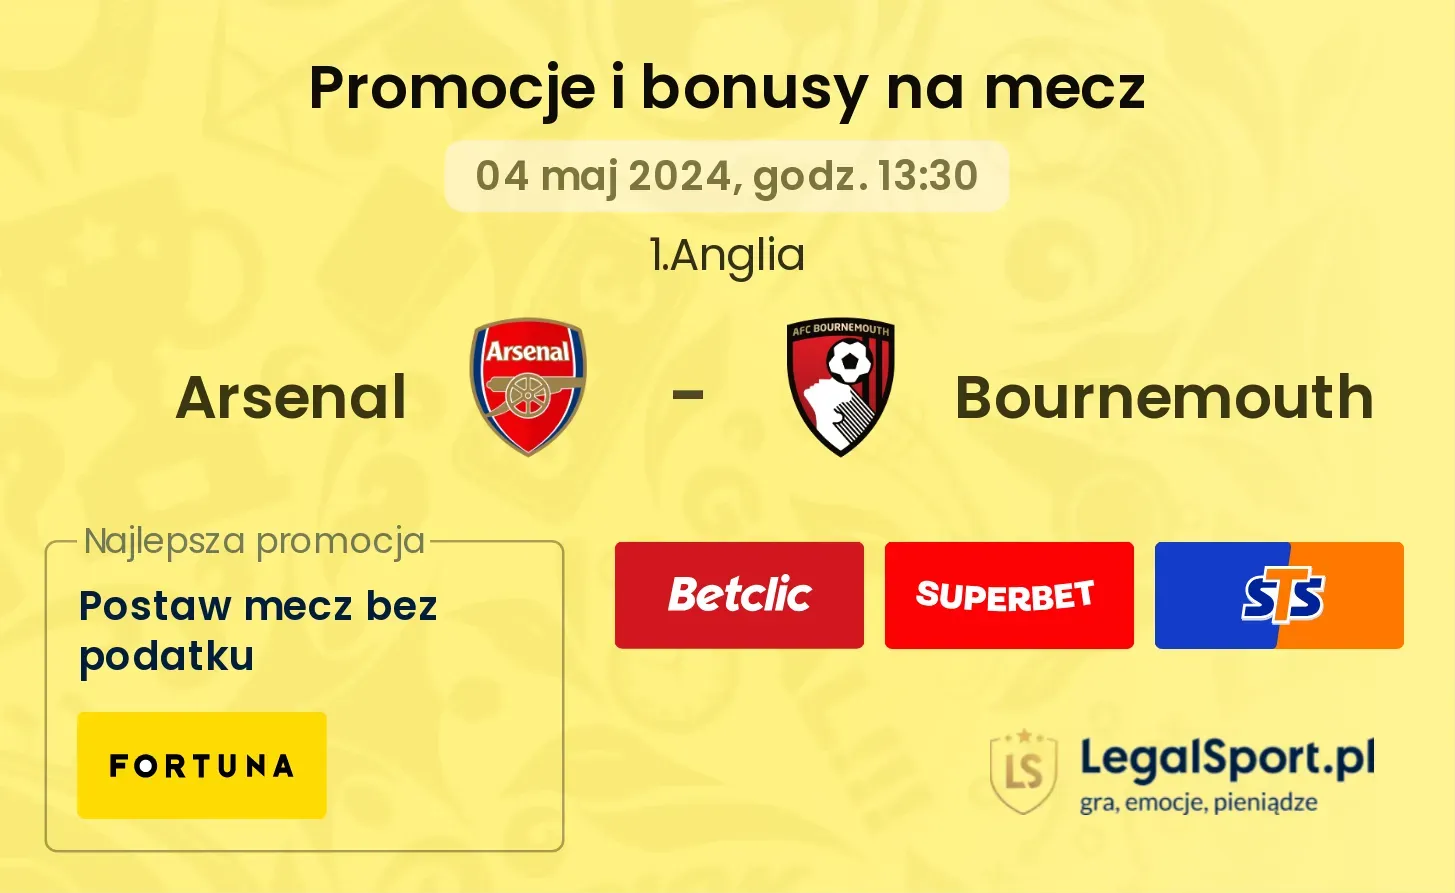 Arsenal - Bournemouth promocje bonusy na mecz